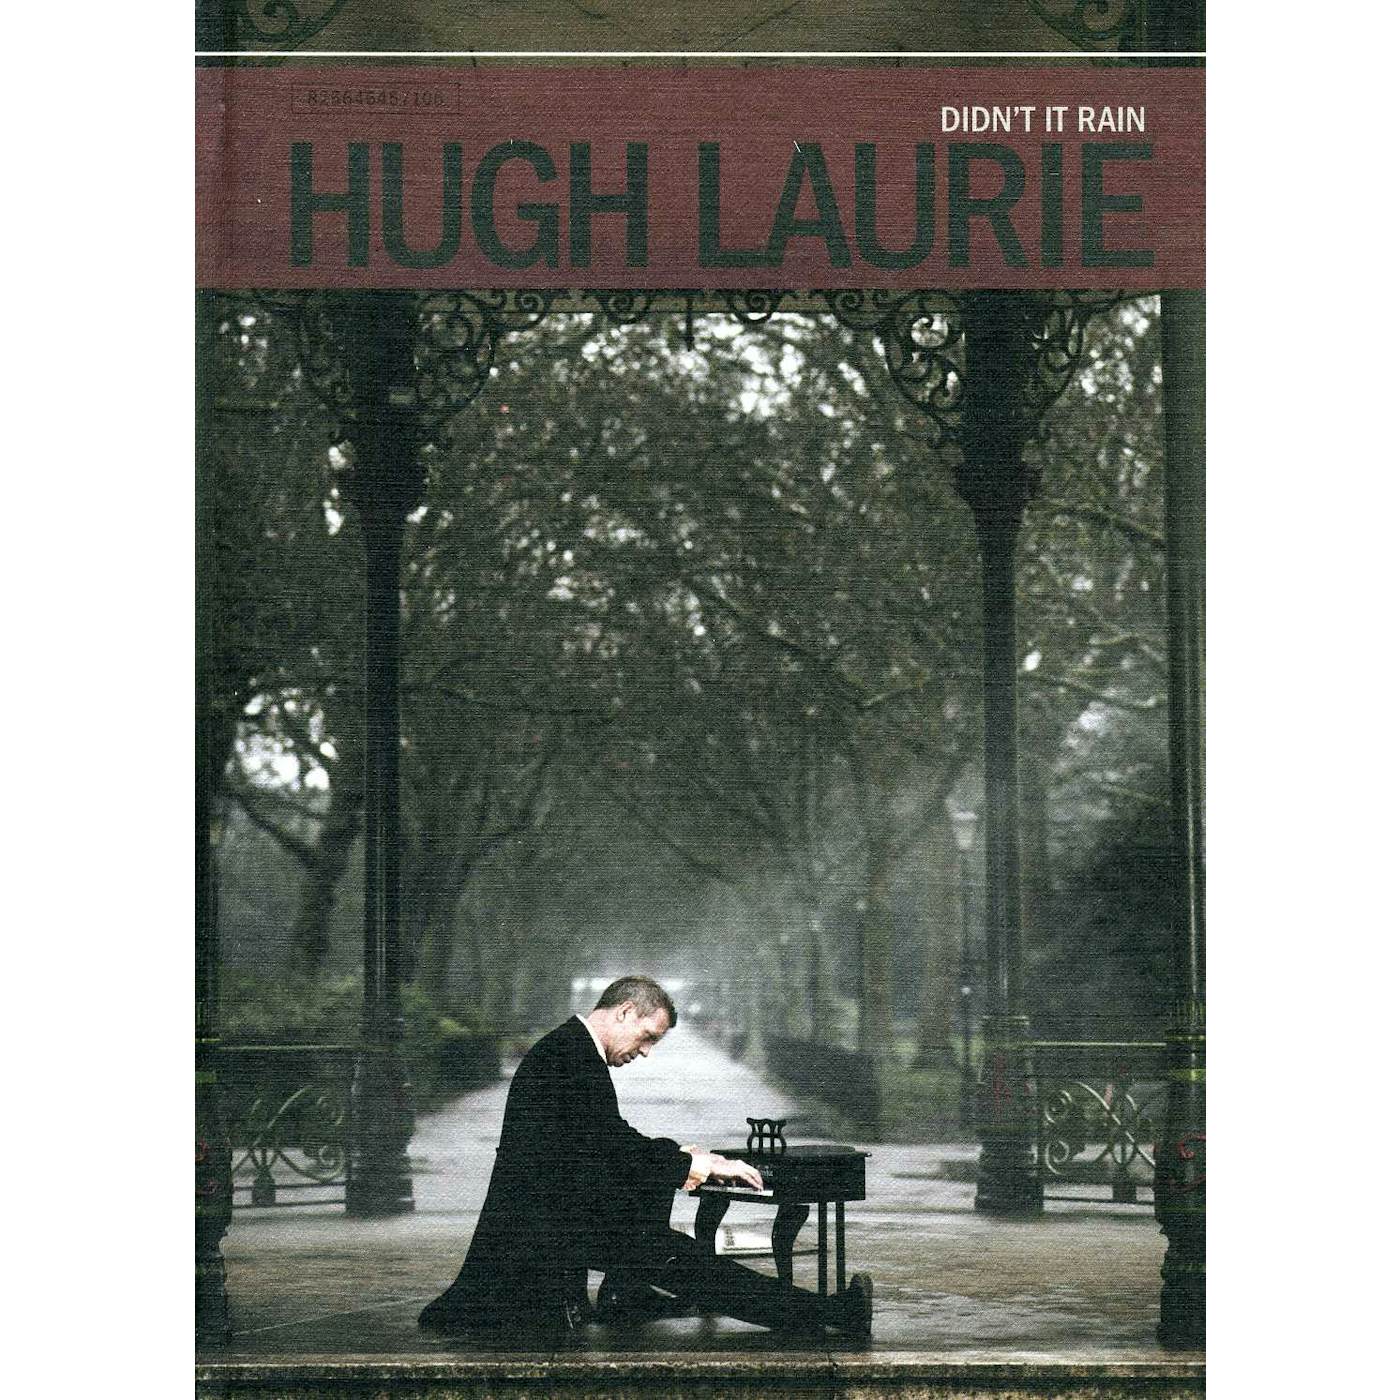 Hugh Laurie DIDN'T IT RAIN: LIMITED DIGIBOOK CD